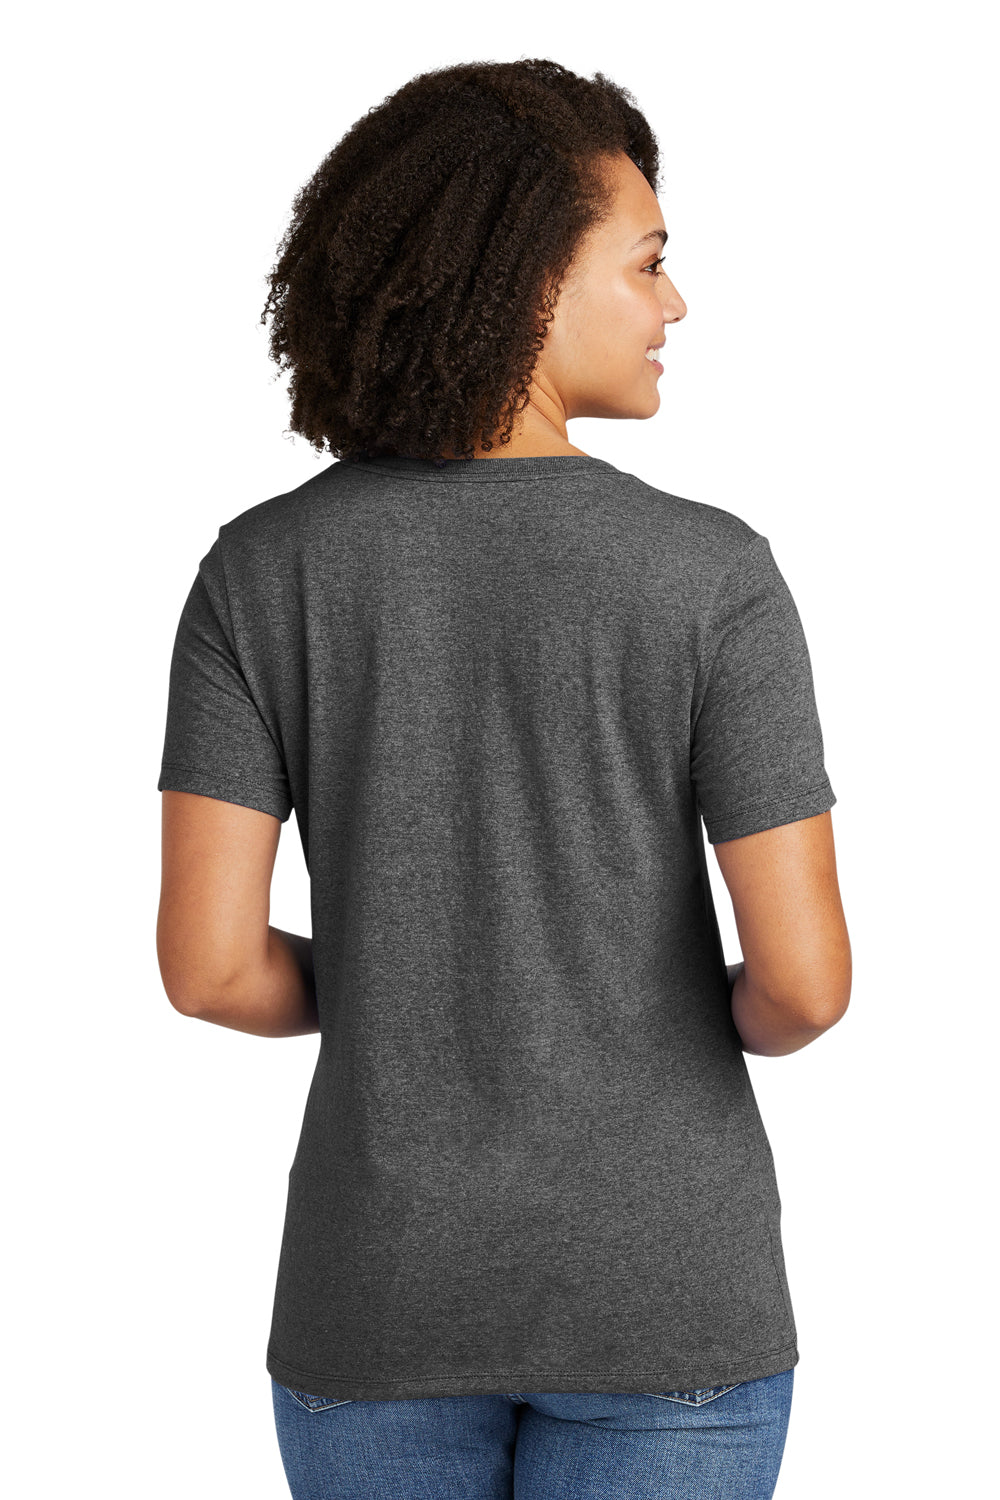 Allmade AL2303 Womens Recycled Short Sleeve V-Neck T-Shirt Heather Charcoal Grey Model Back